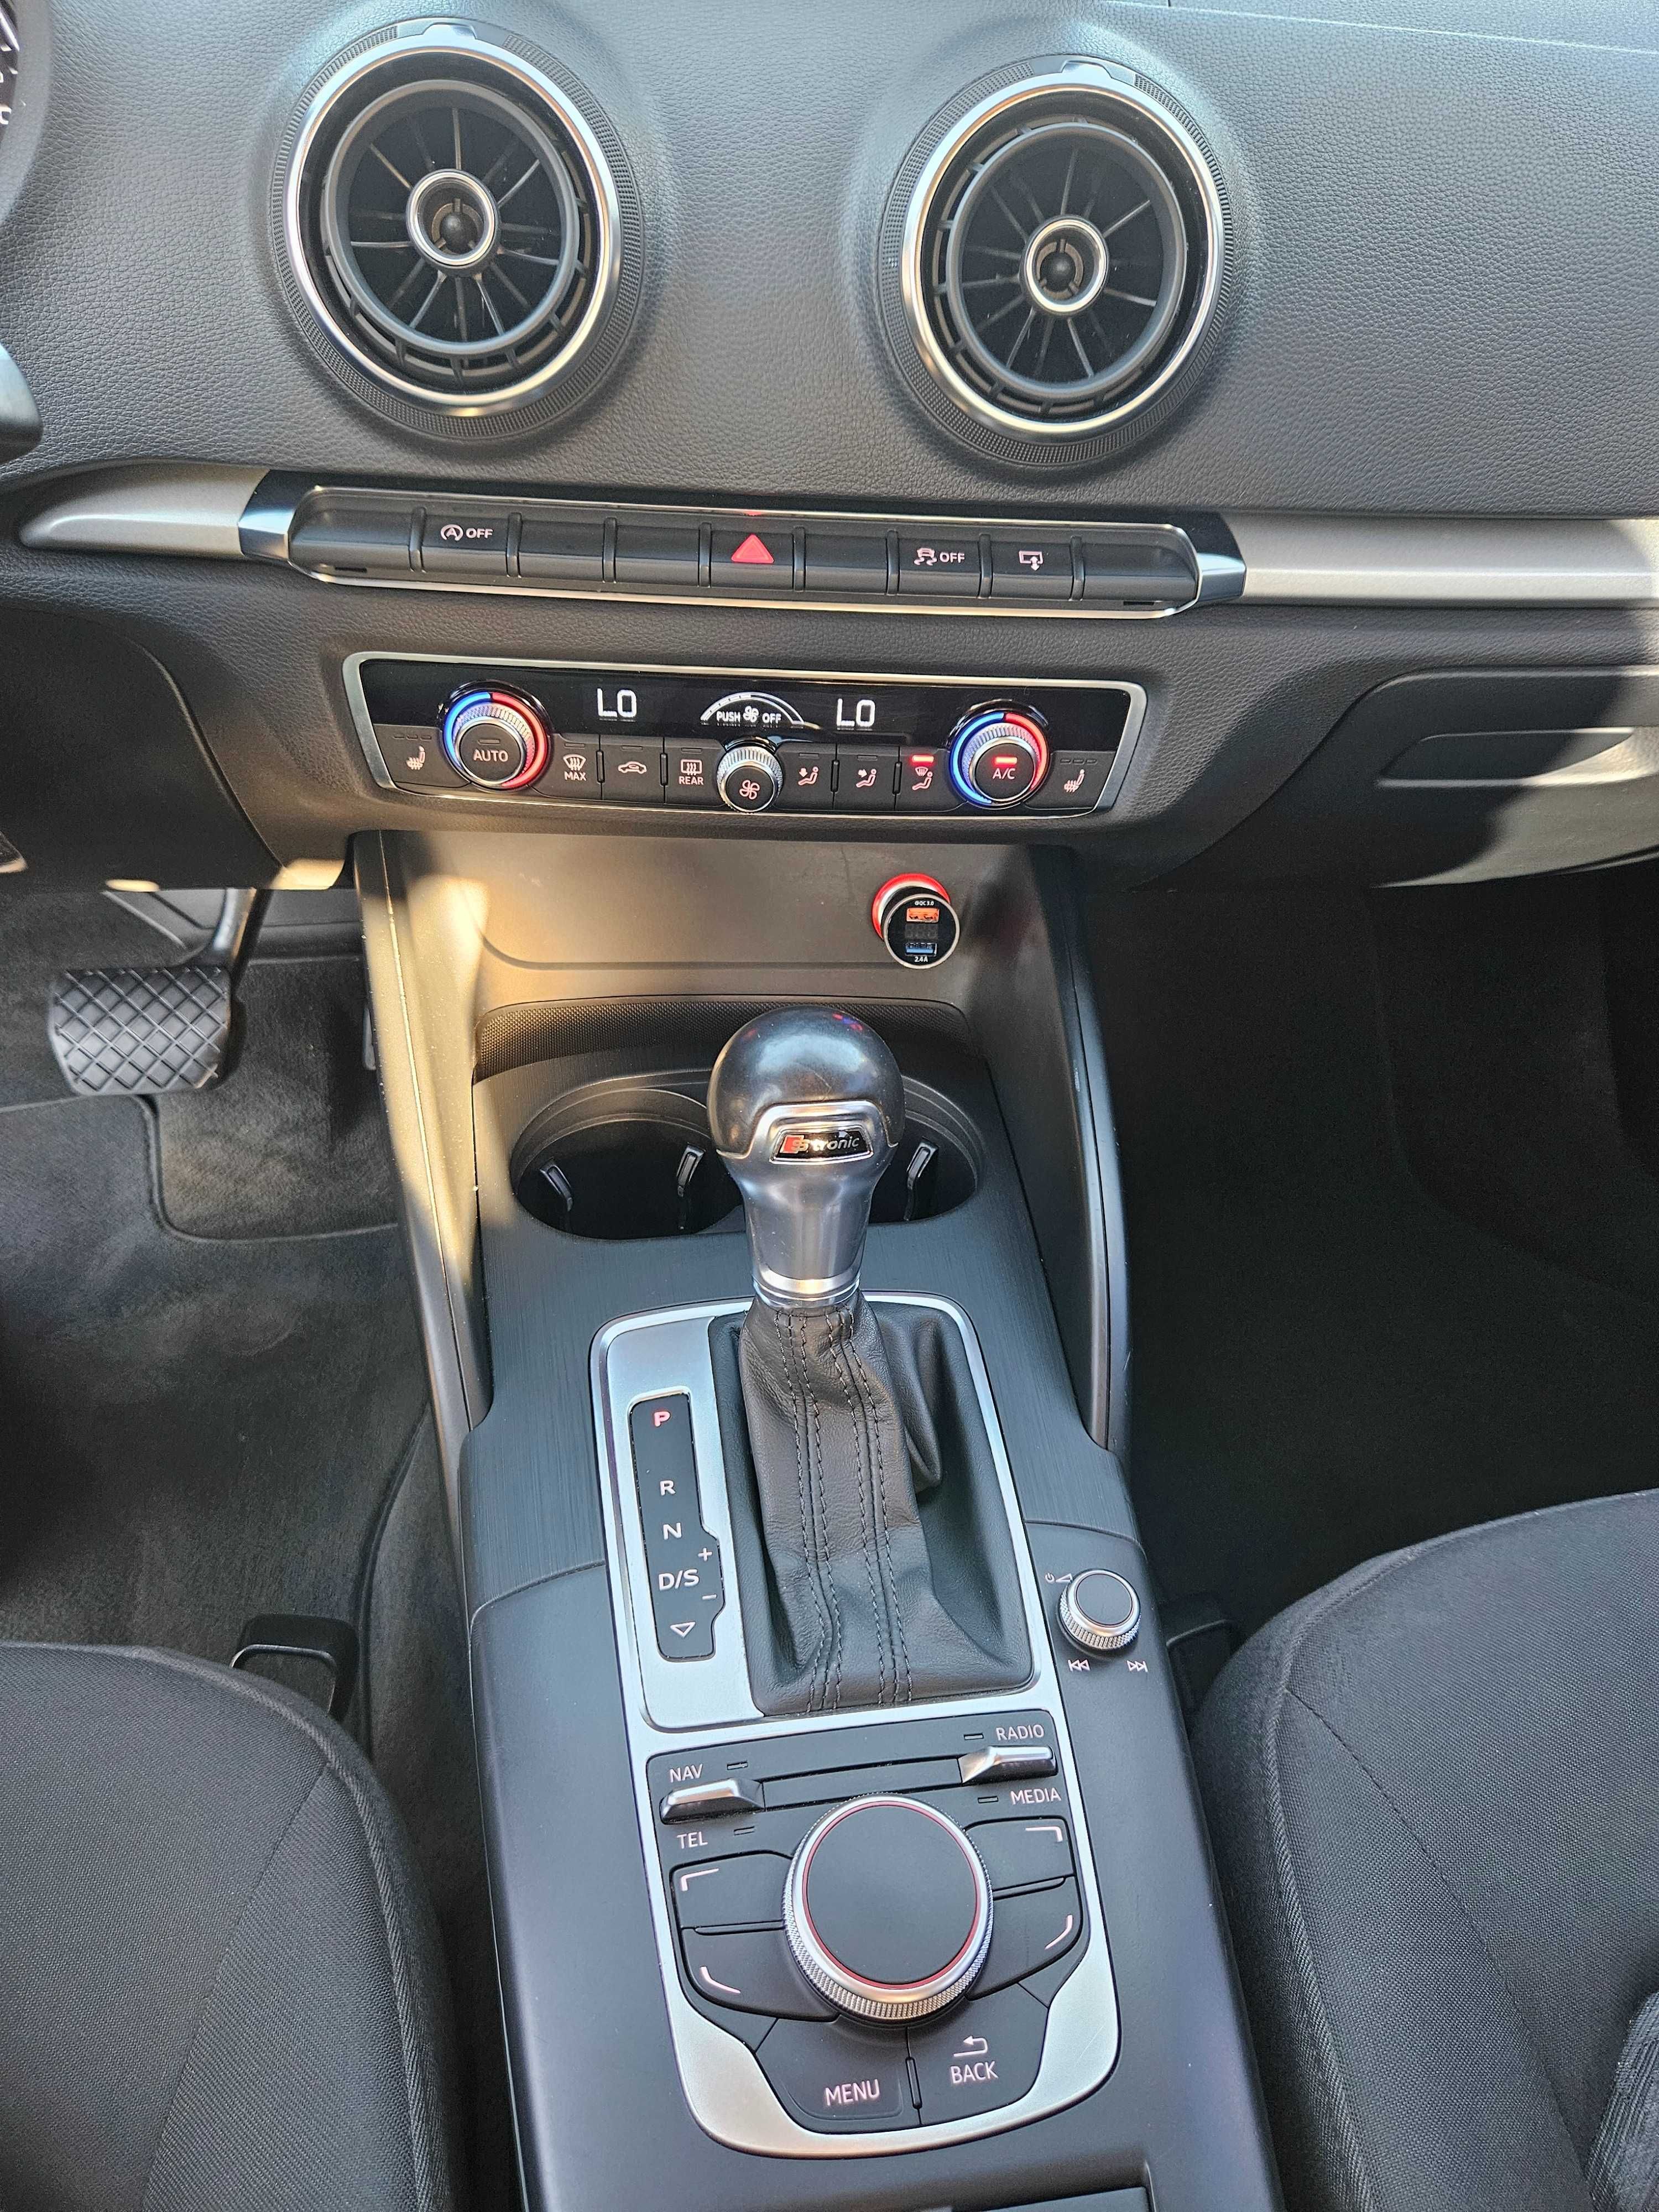 Audi A3, 2014 г. 1.6TDI, АКПП.